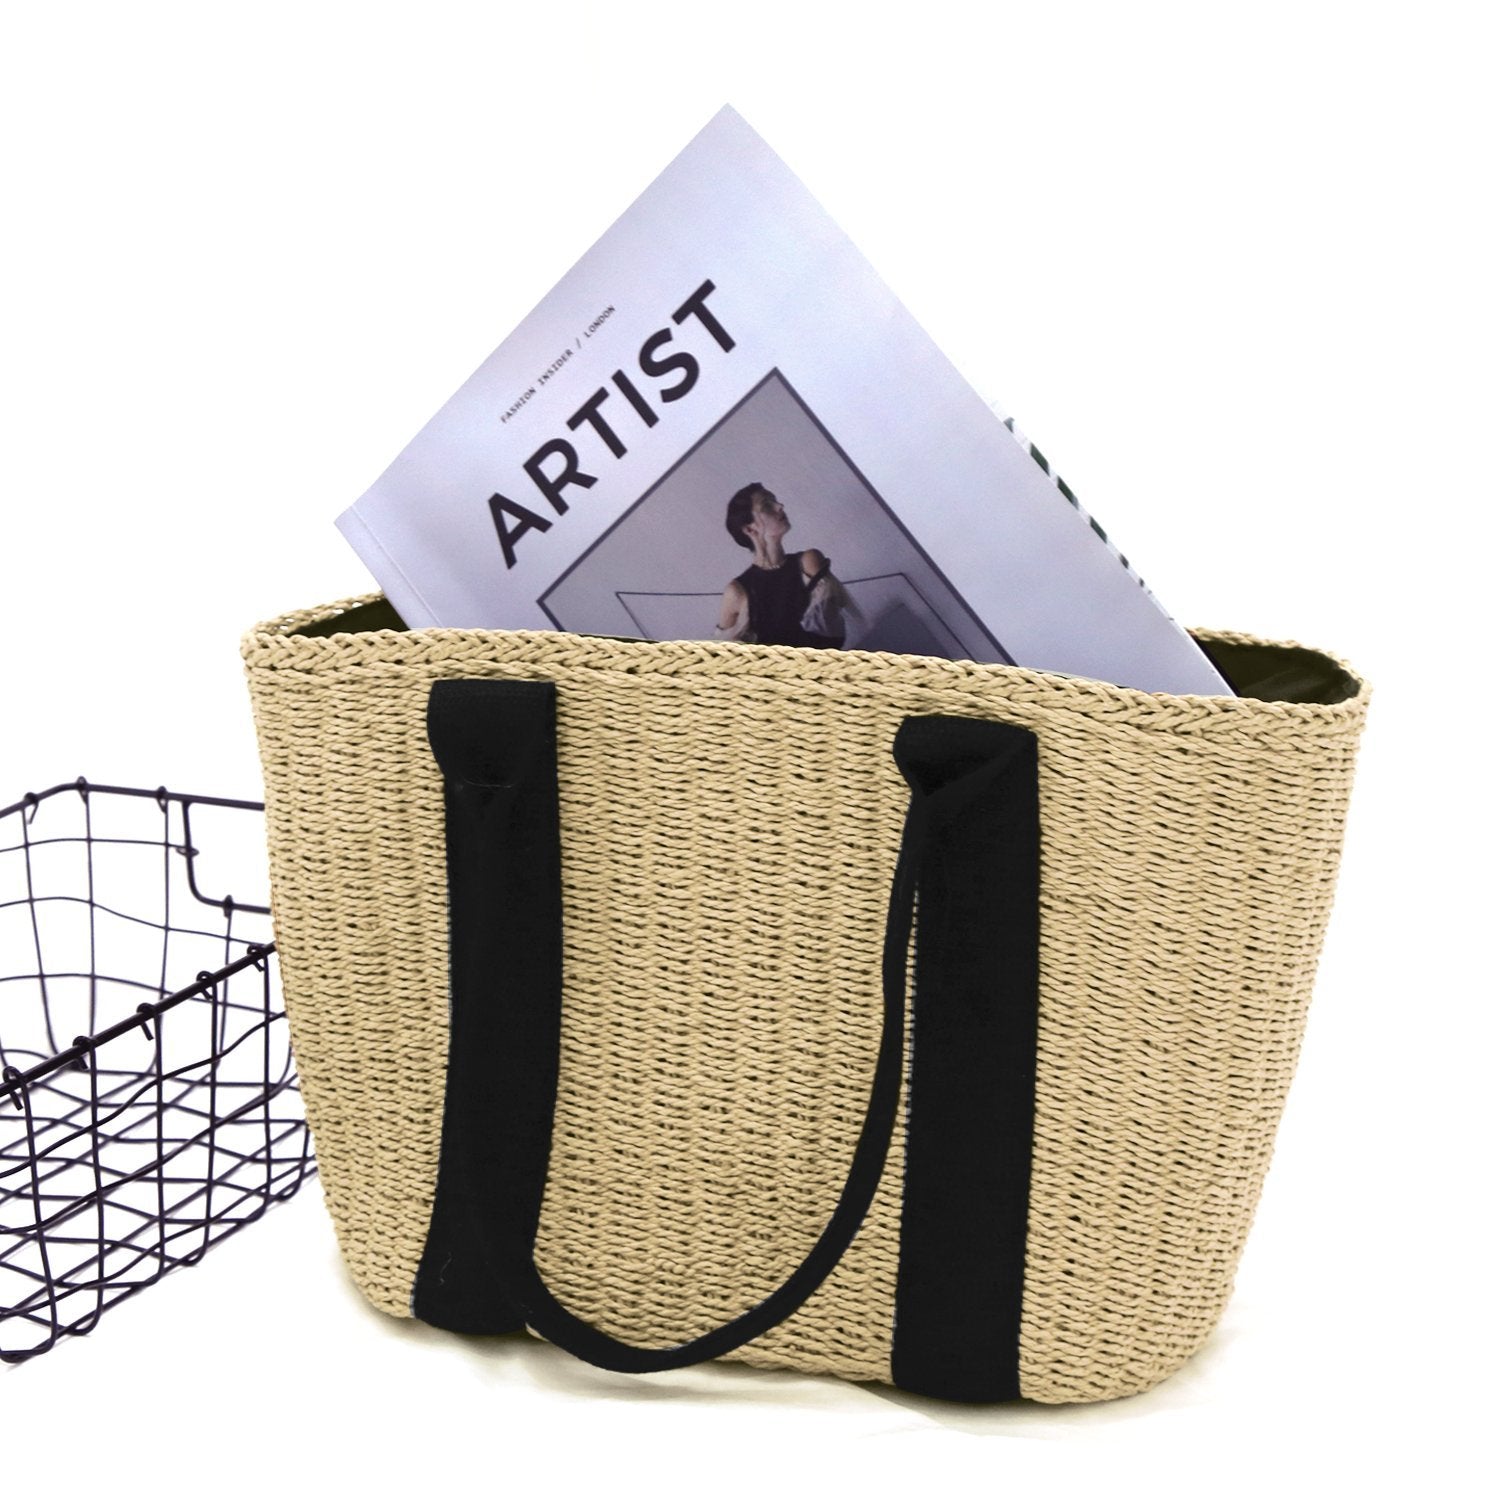 Women handbag Polyester cotton+paper rope For Holiday, Beach, Leisure High-capacity Tote Bag - ebowsos